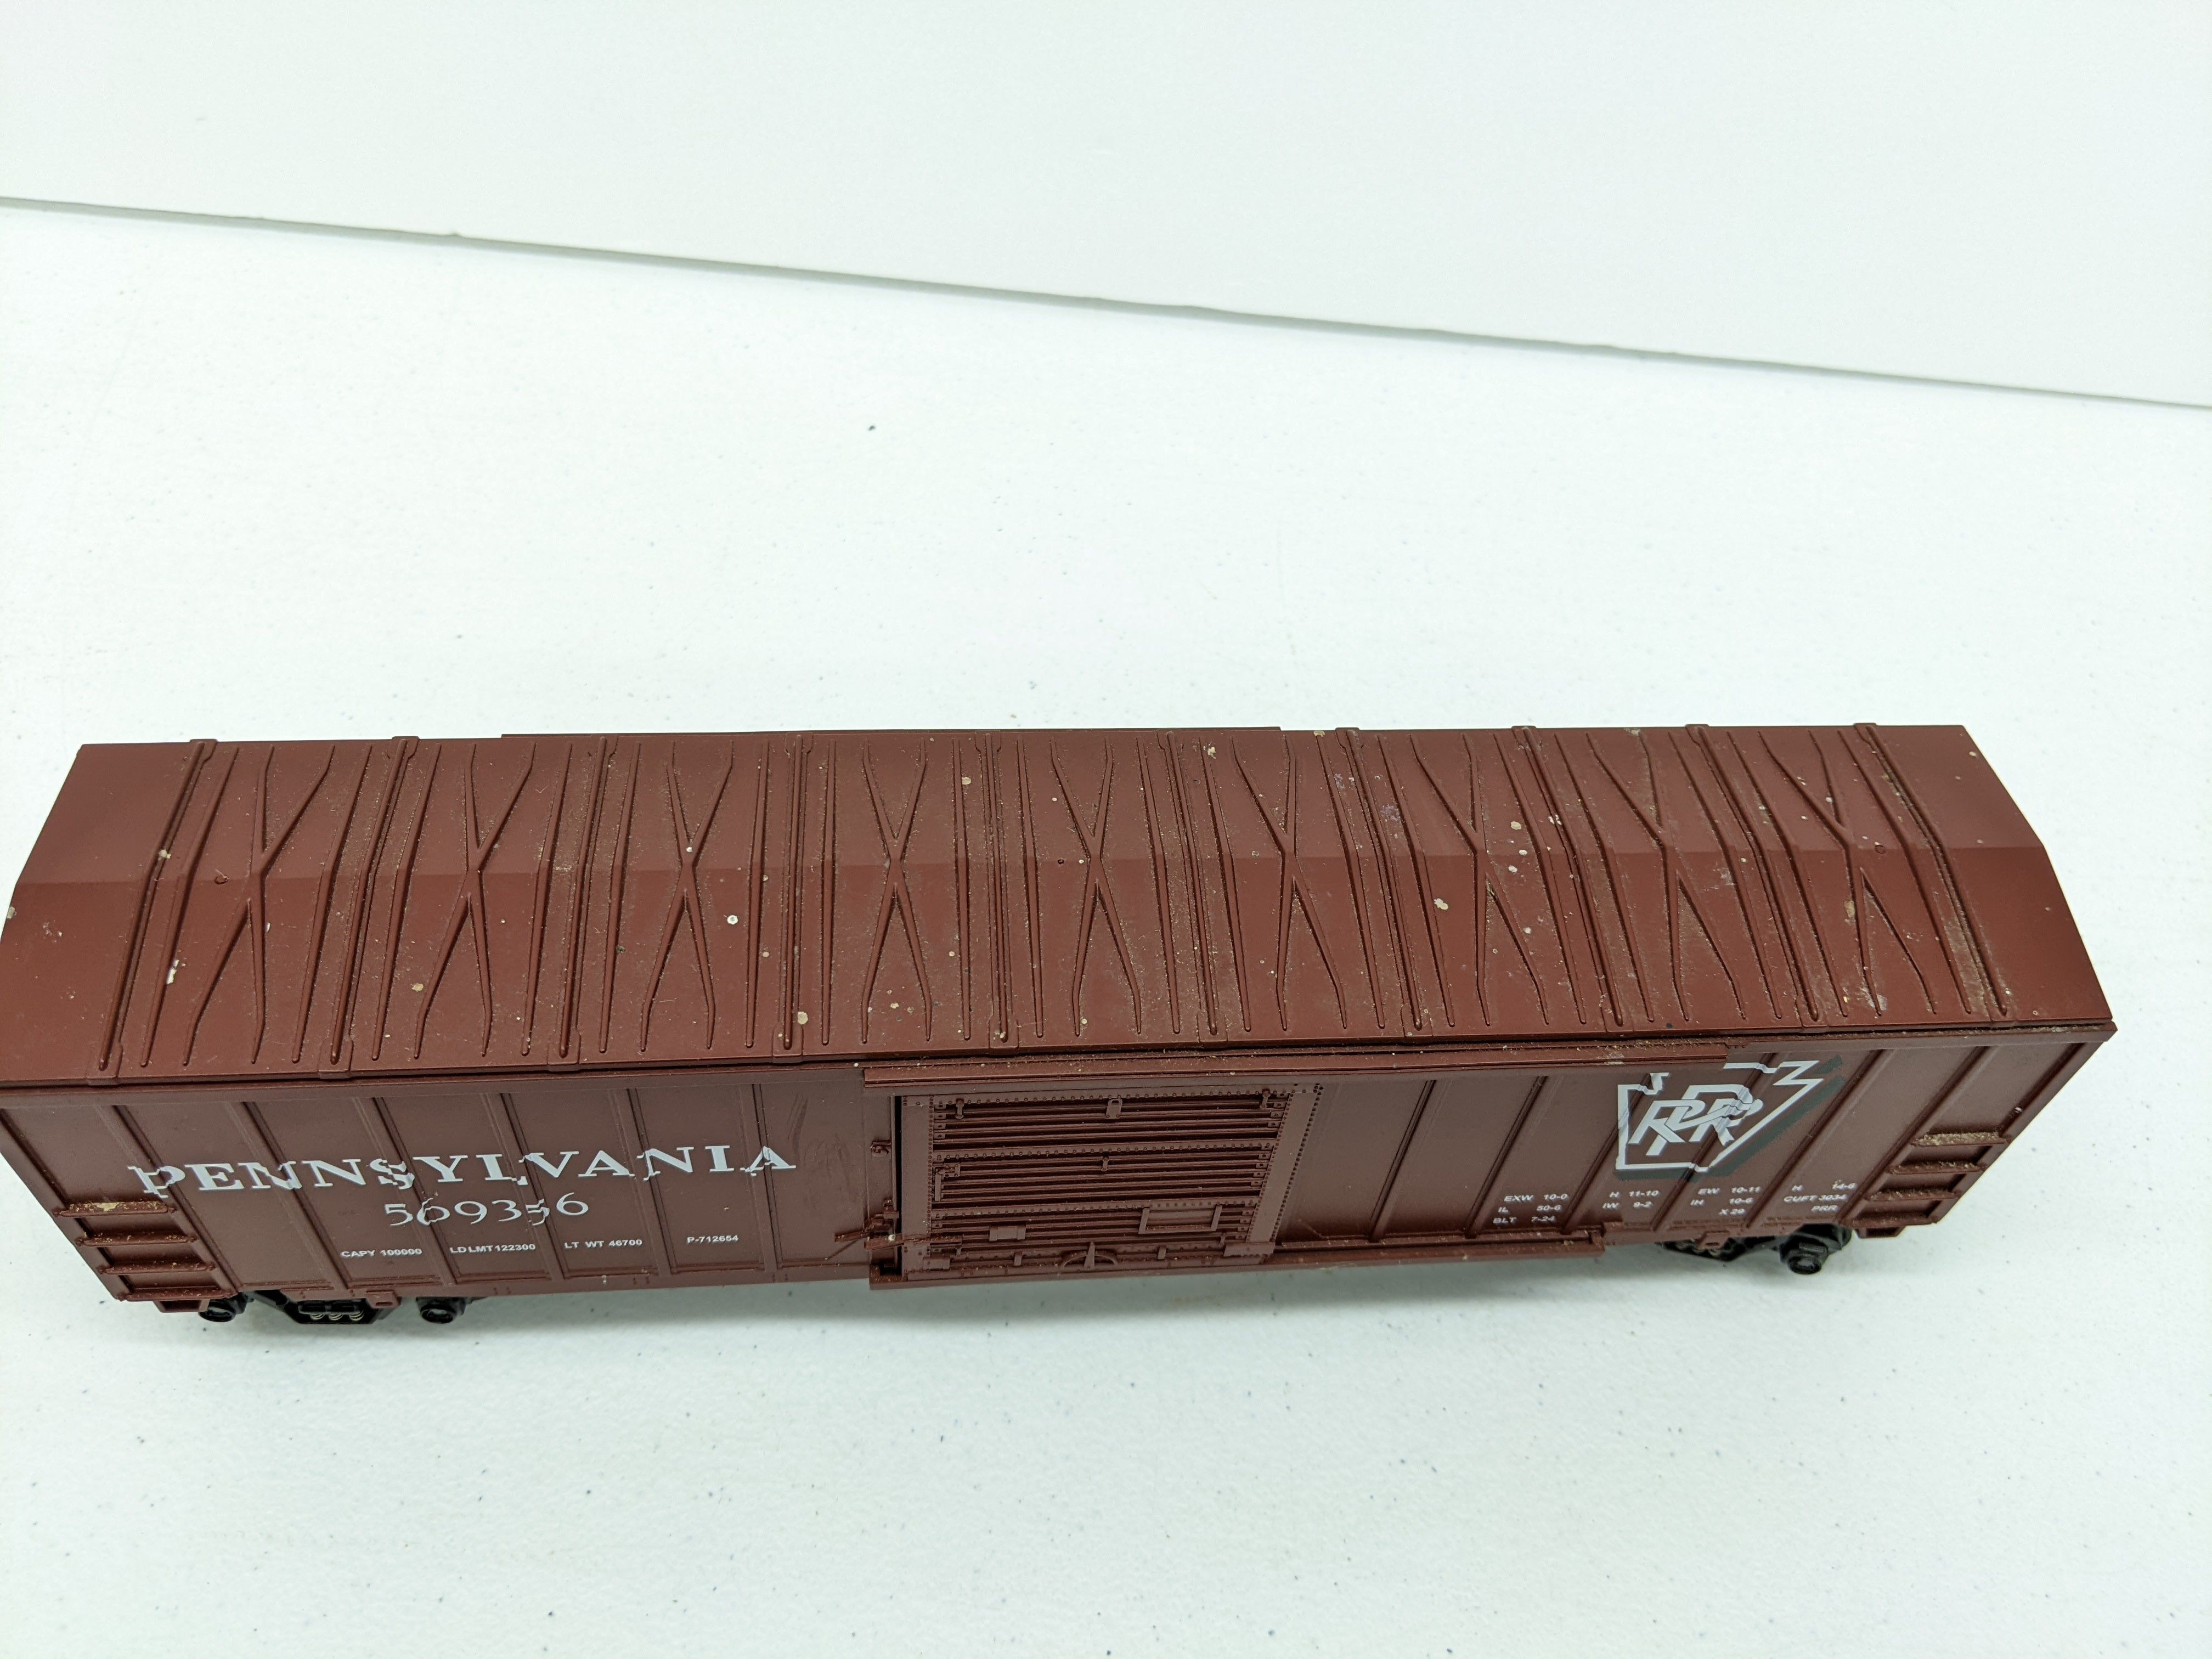 USED MTH Rail King 30-7016A O Scale, 50' Modern Box Car, Pennsylvania #569356